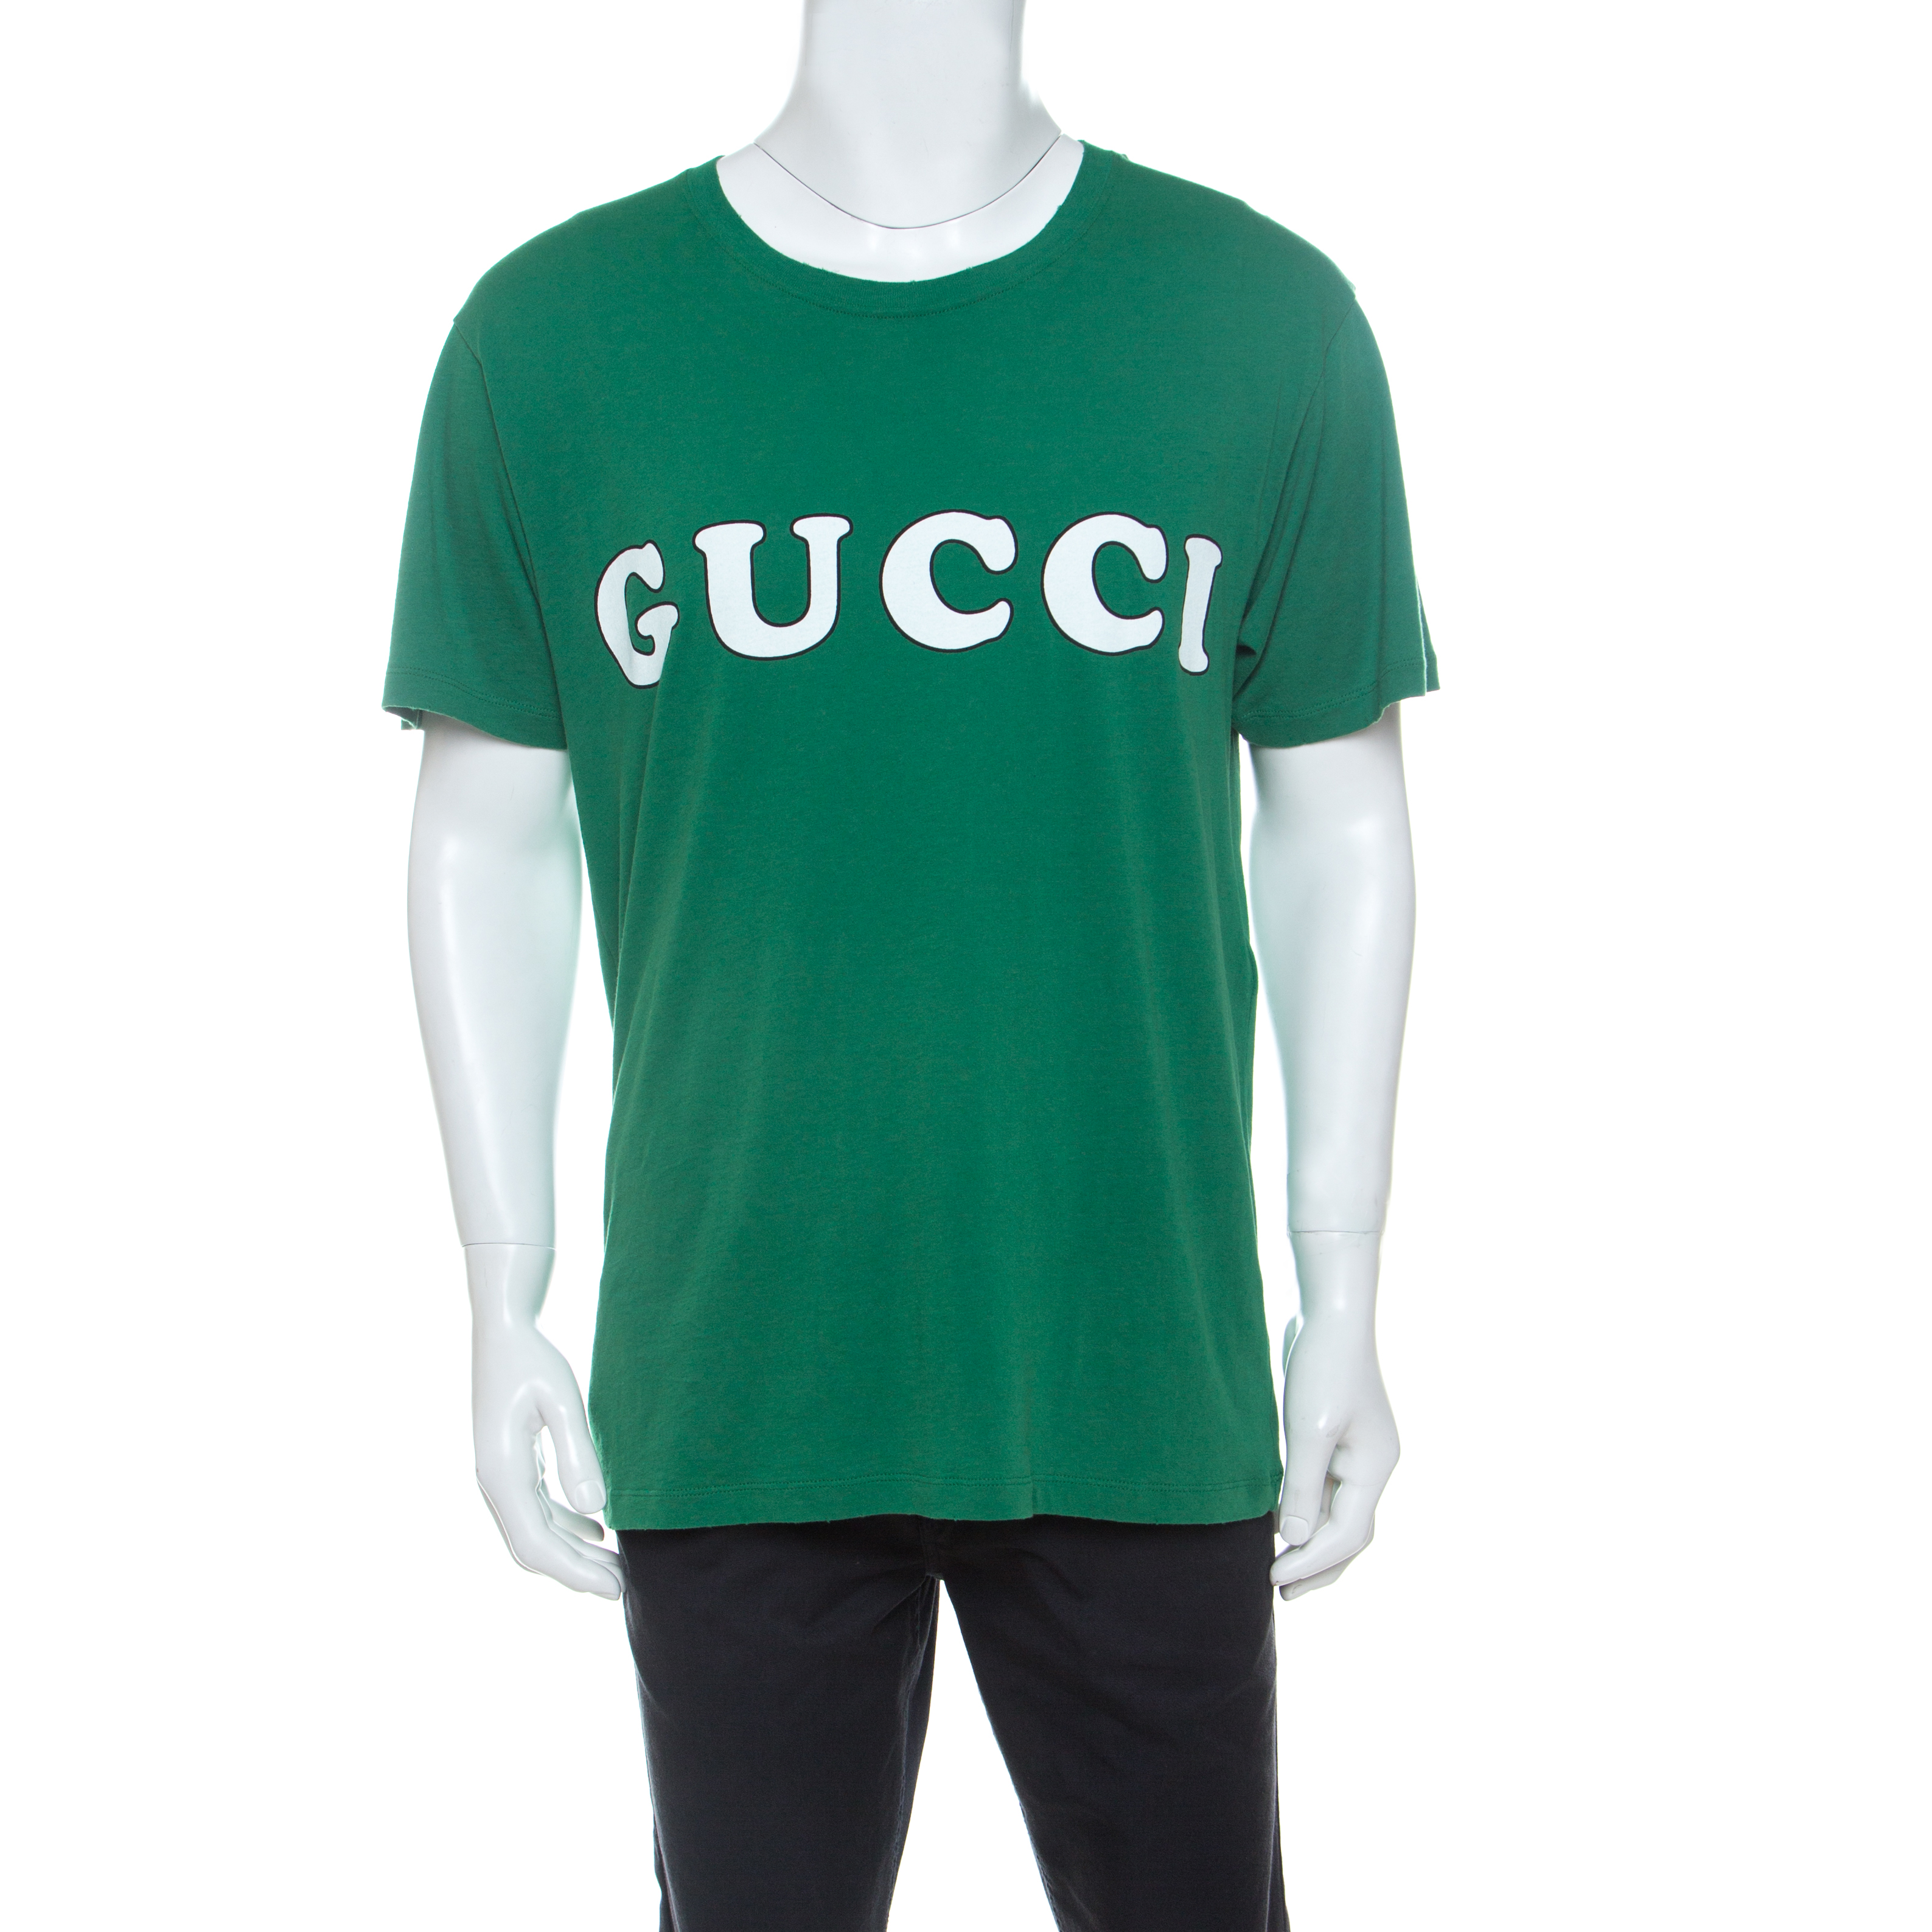 gucci shirt green